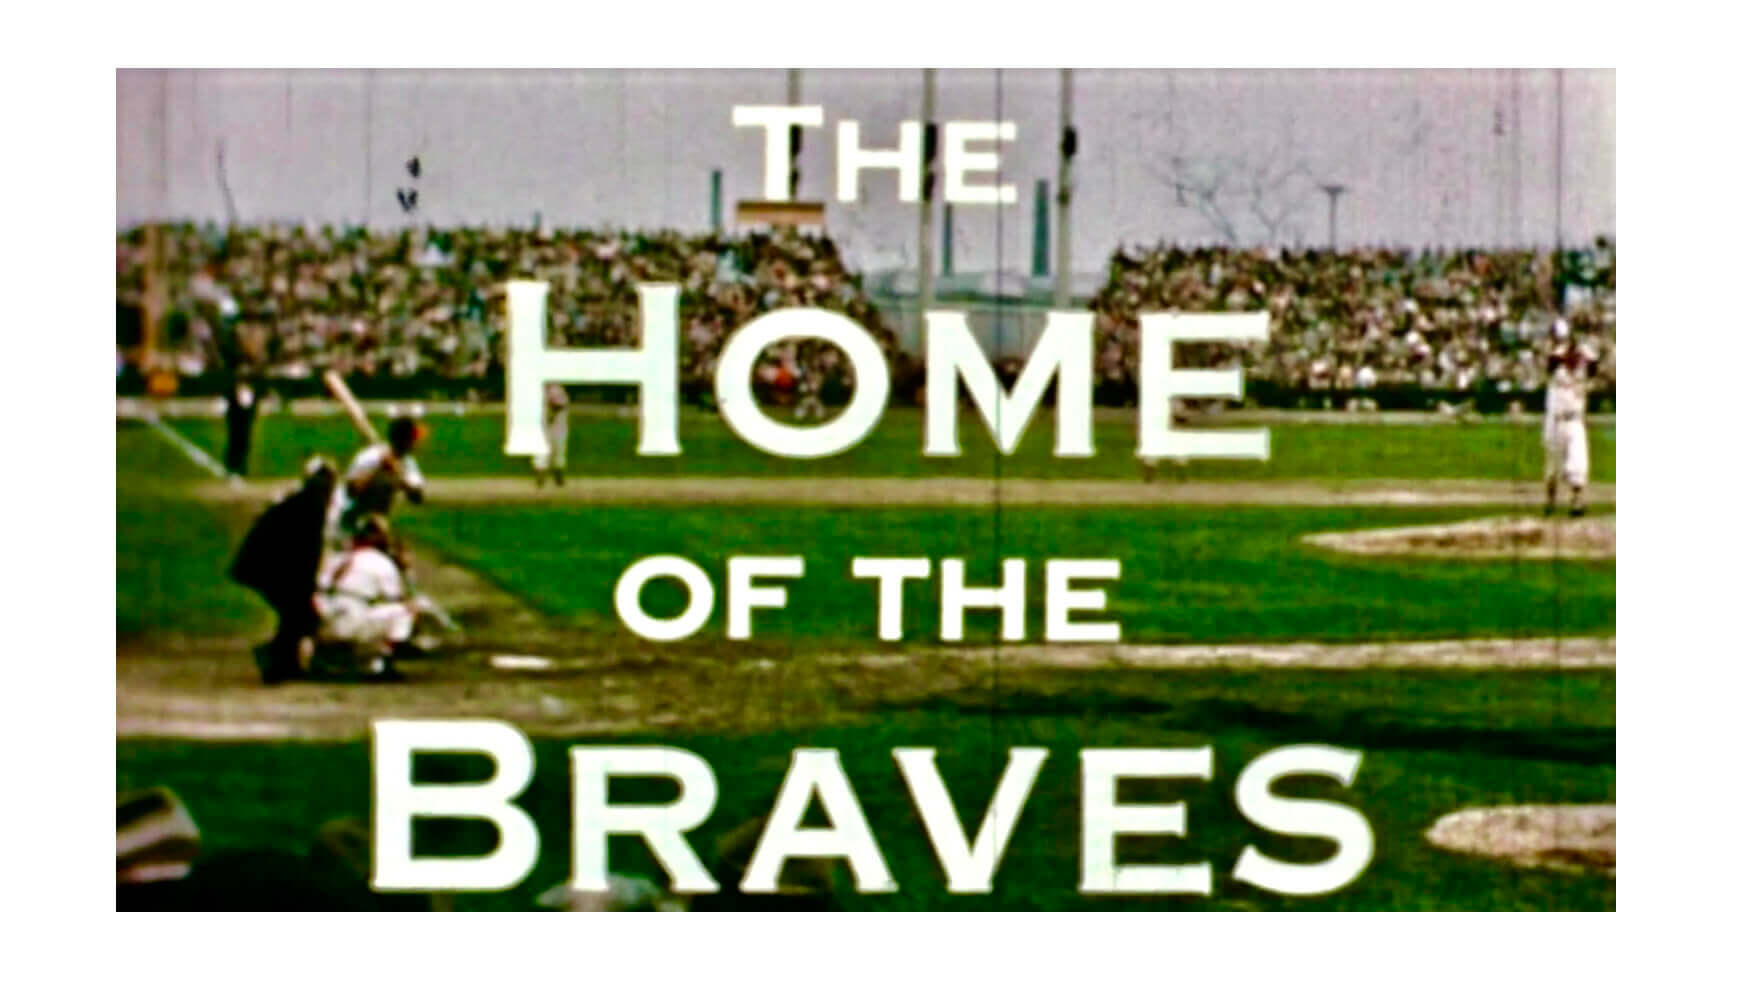 1950s Milwaukee Braves graphic t shirt : r/Braves